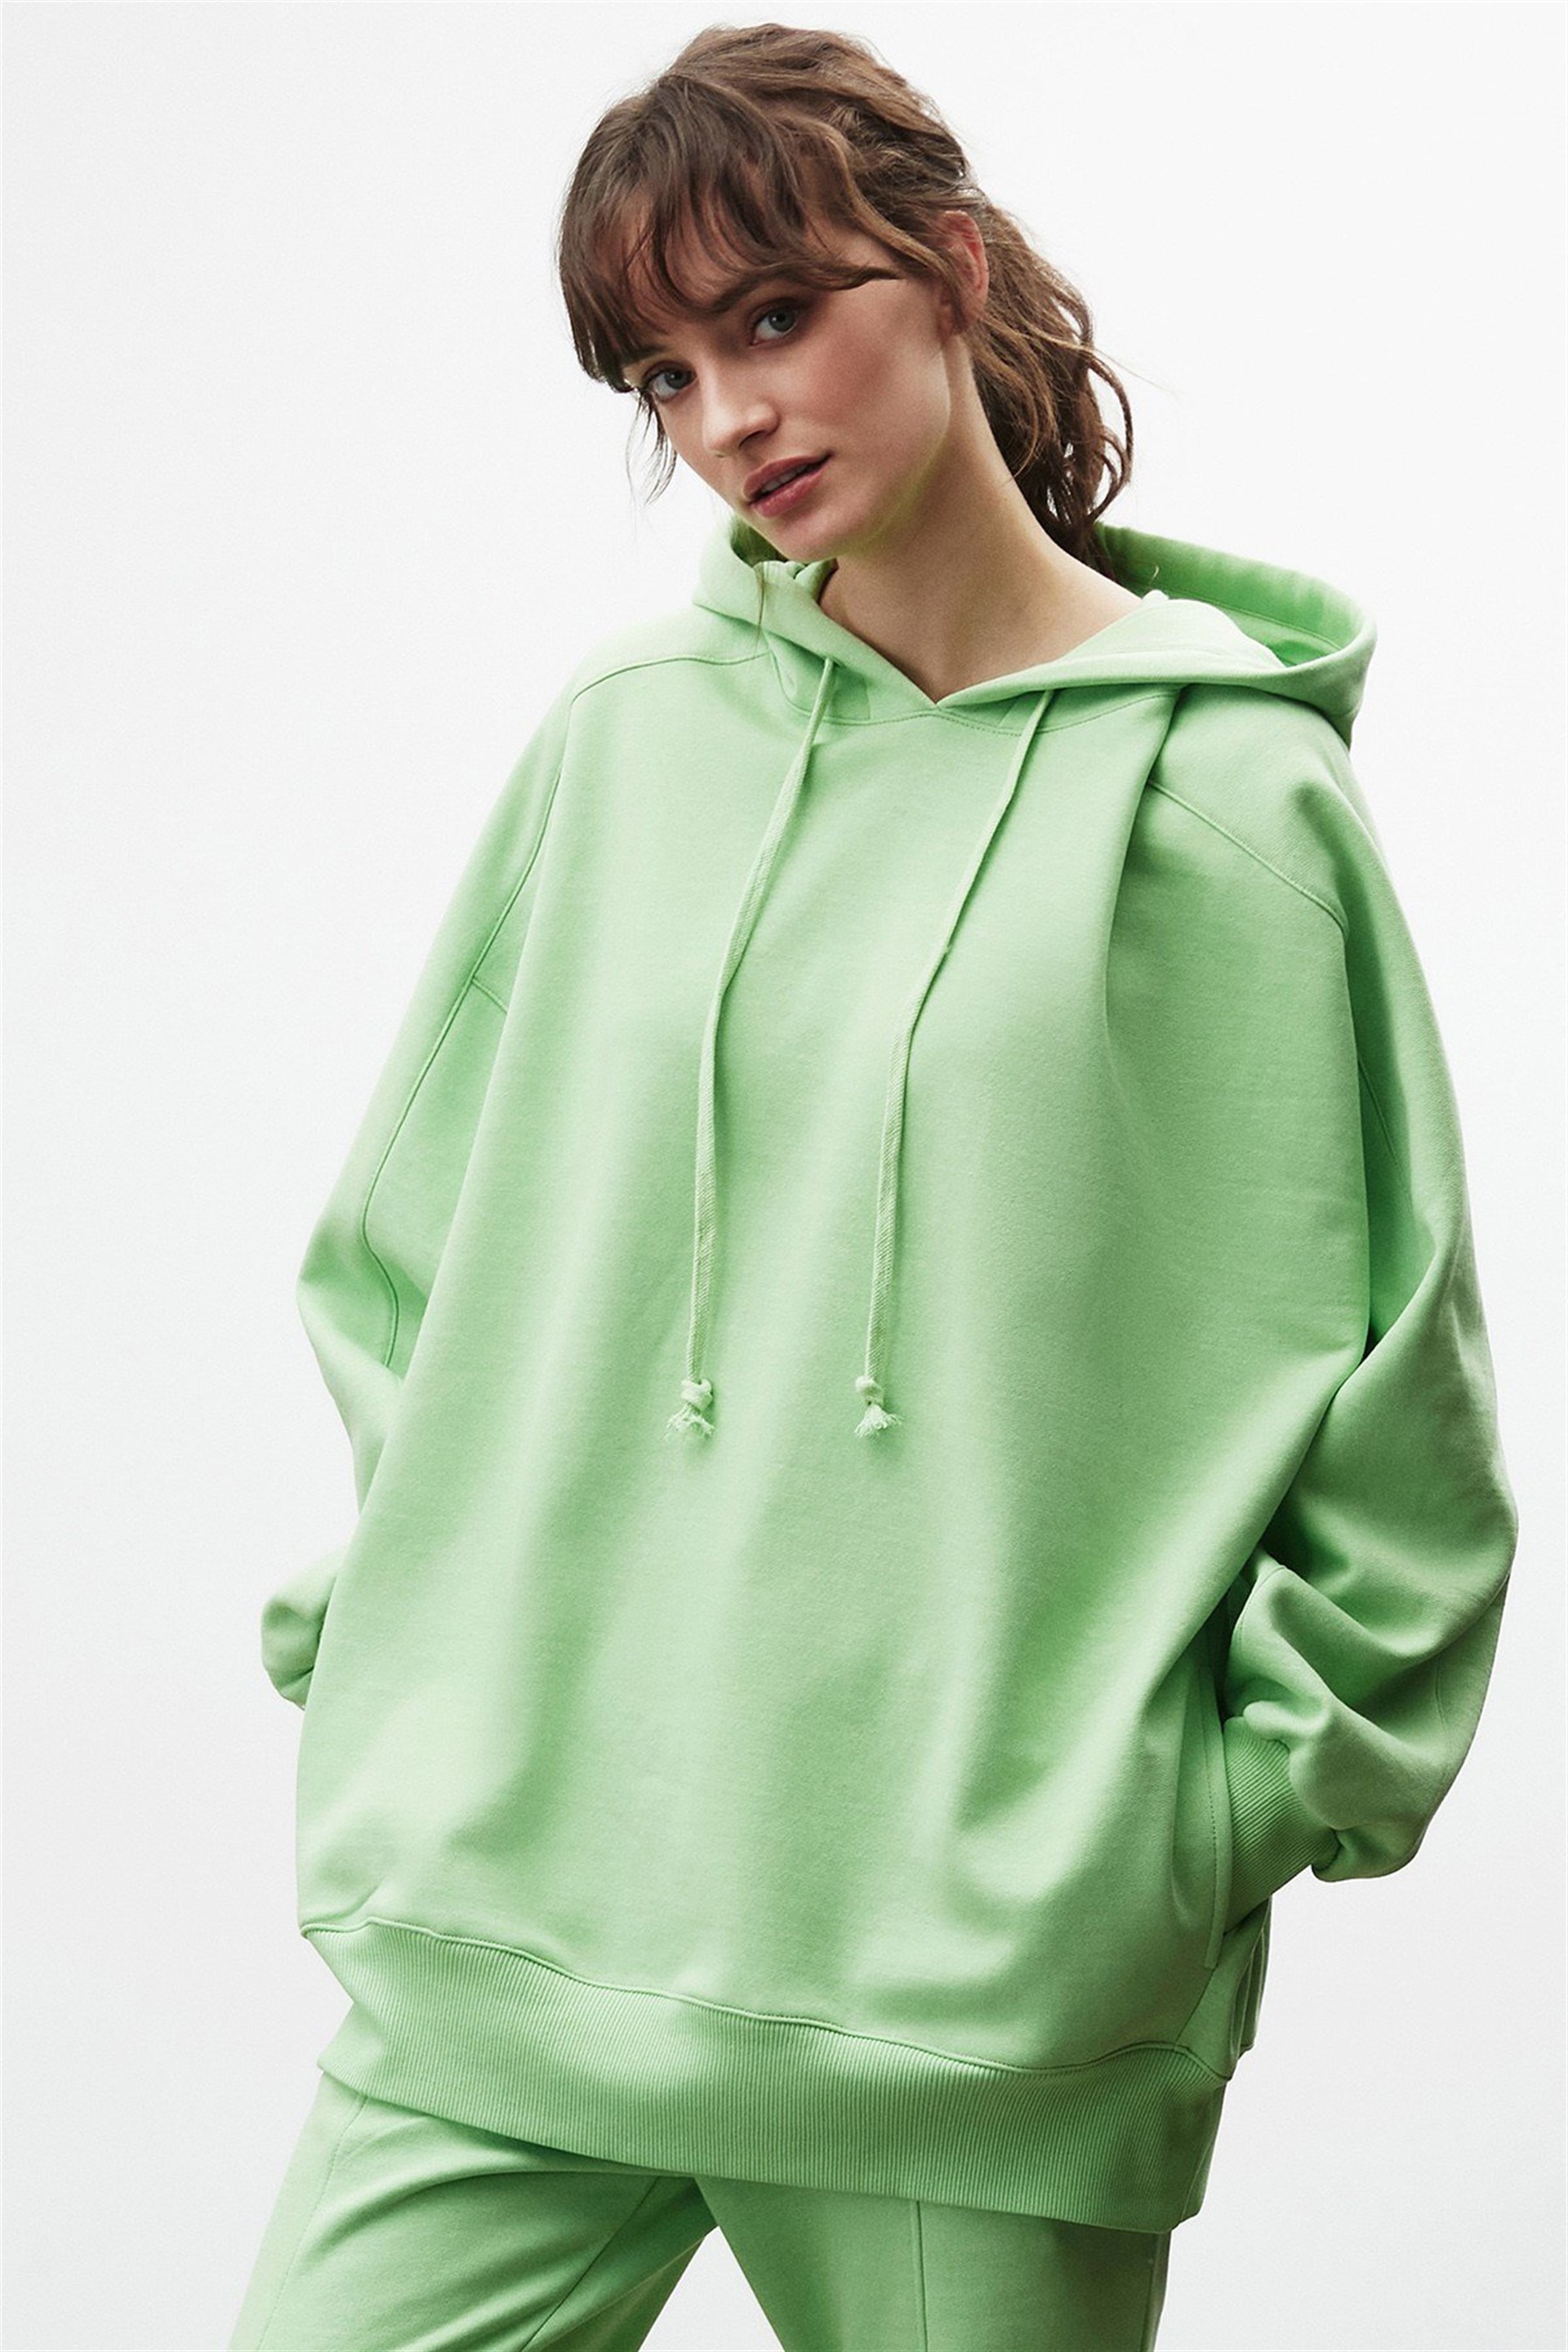 VIENNA Kadın Yeşil Düz Renk Kapüşonlu Comfort Fit Sweatshirt